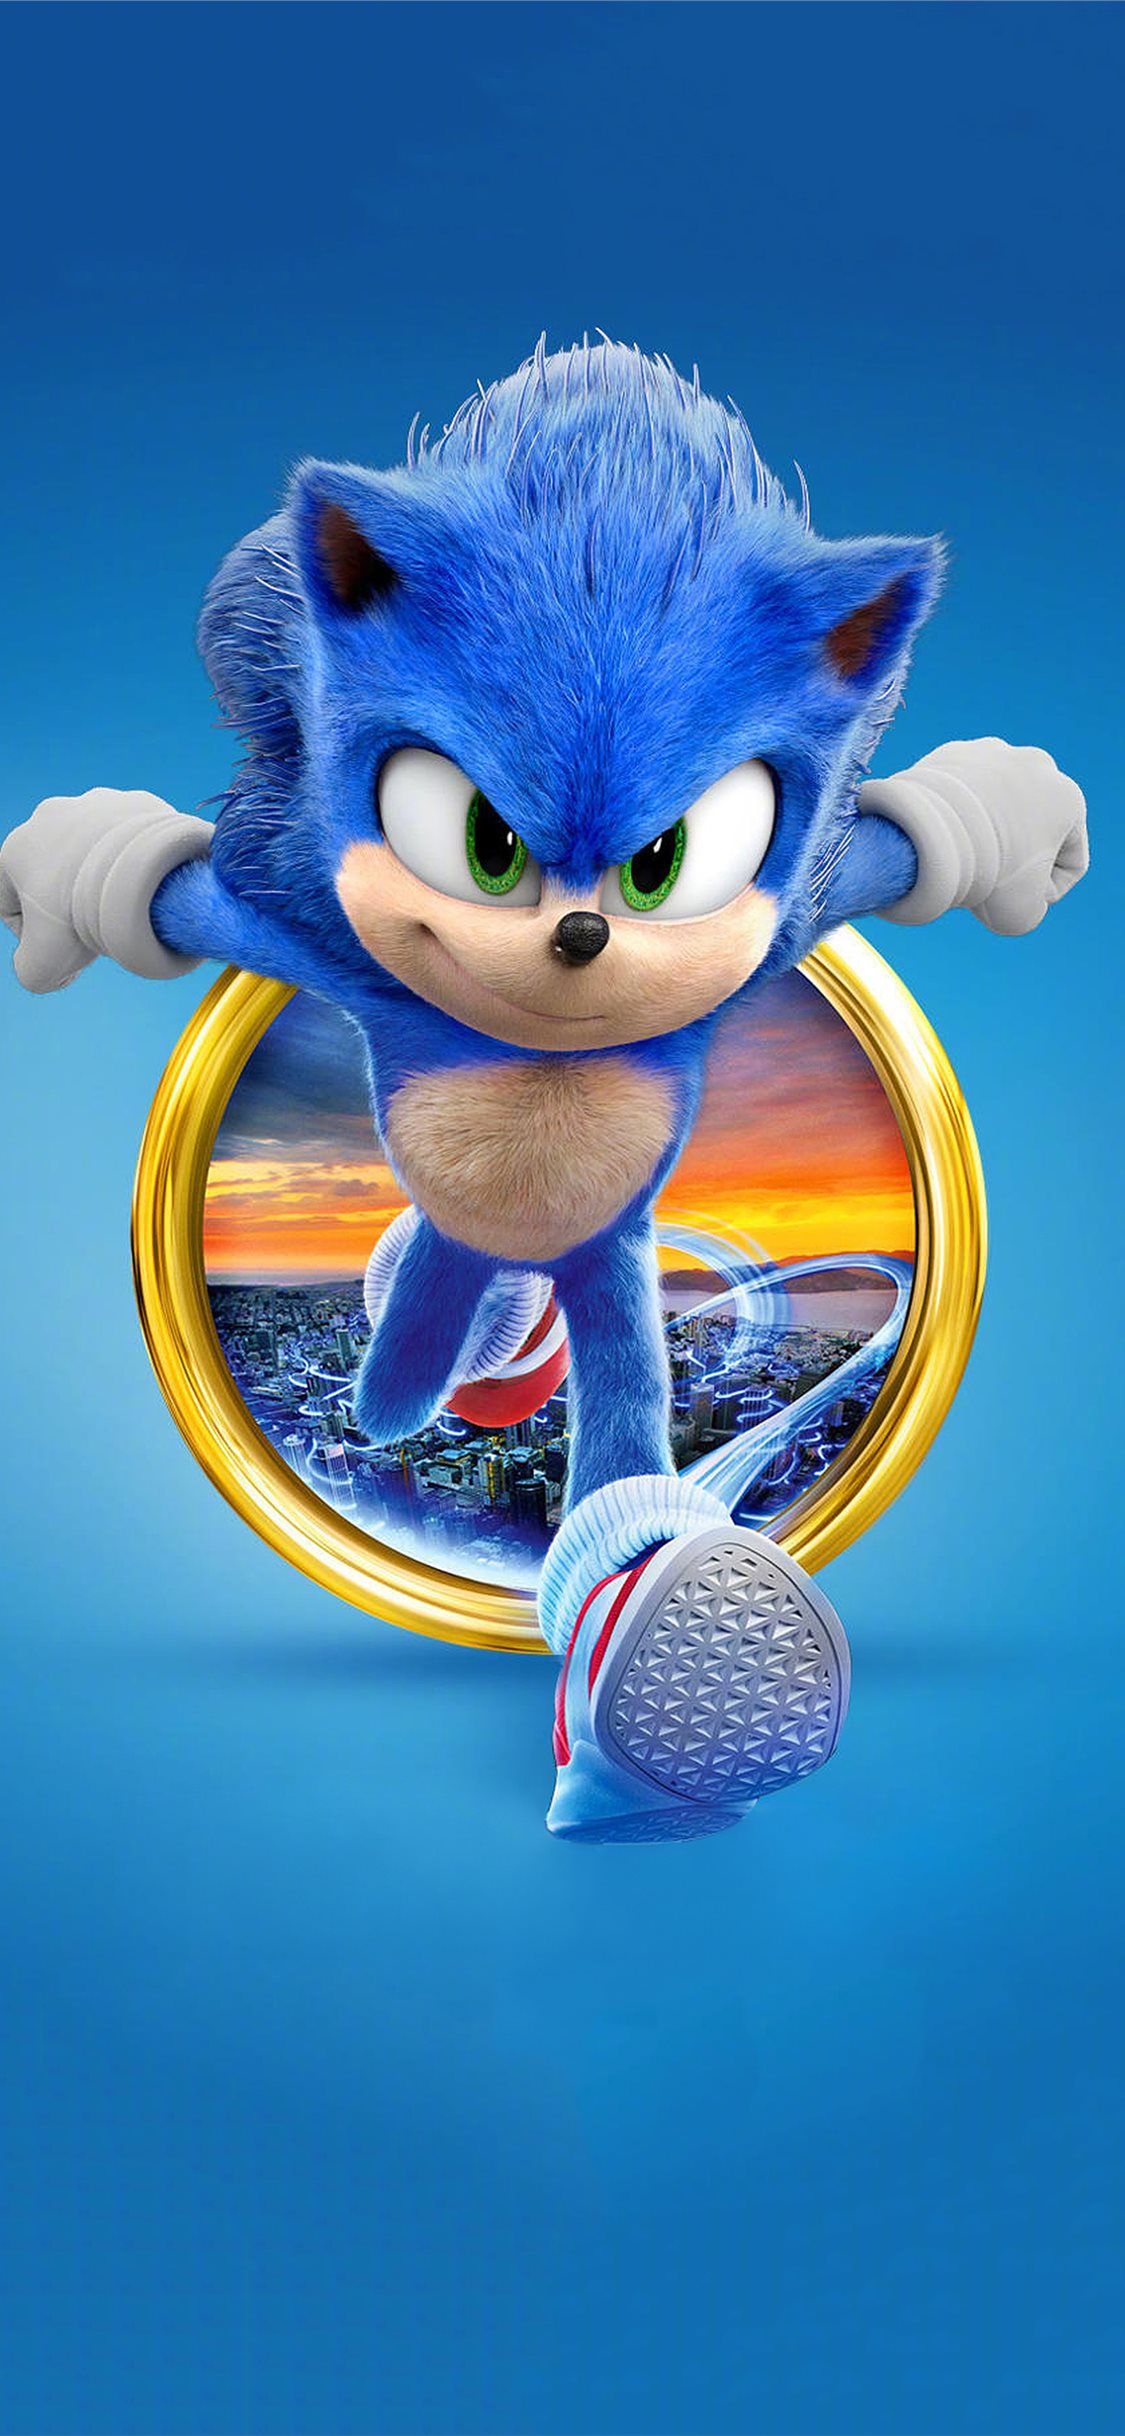 sonic the hedgehog 2020 4k iPhone X Wallpaper Free Download